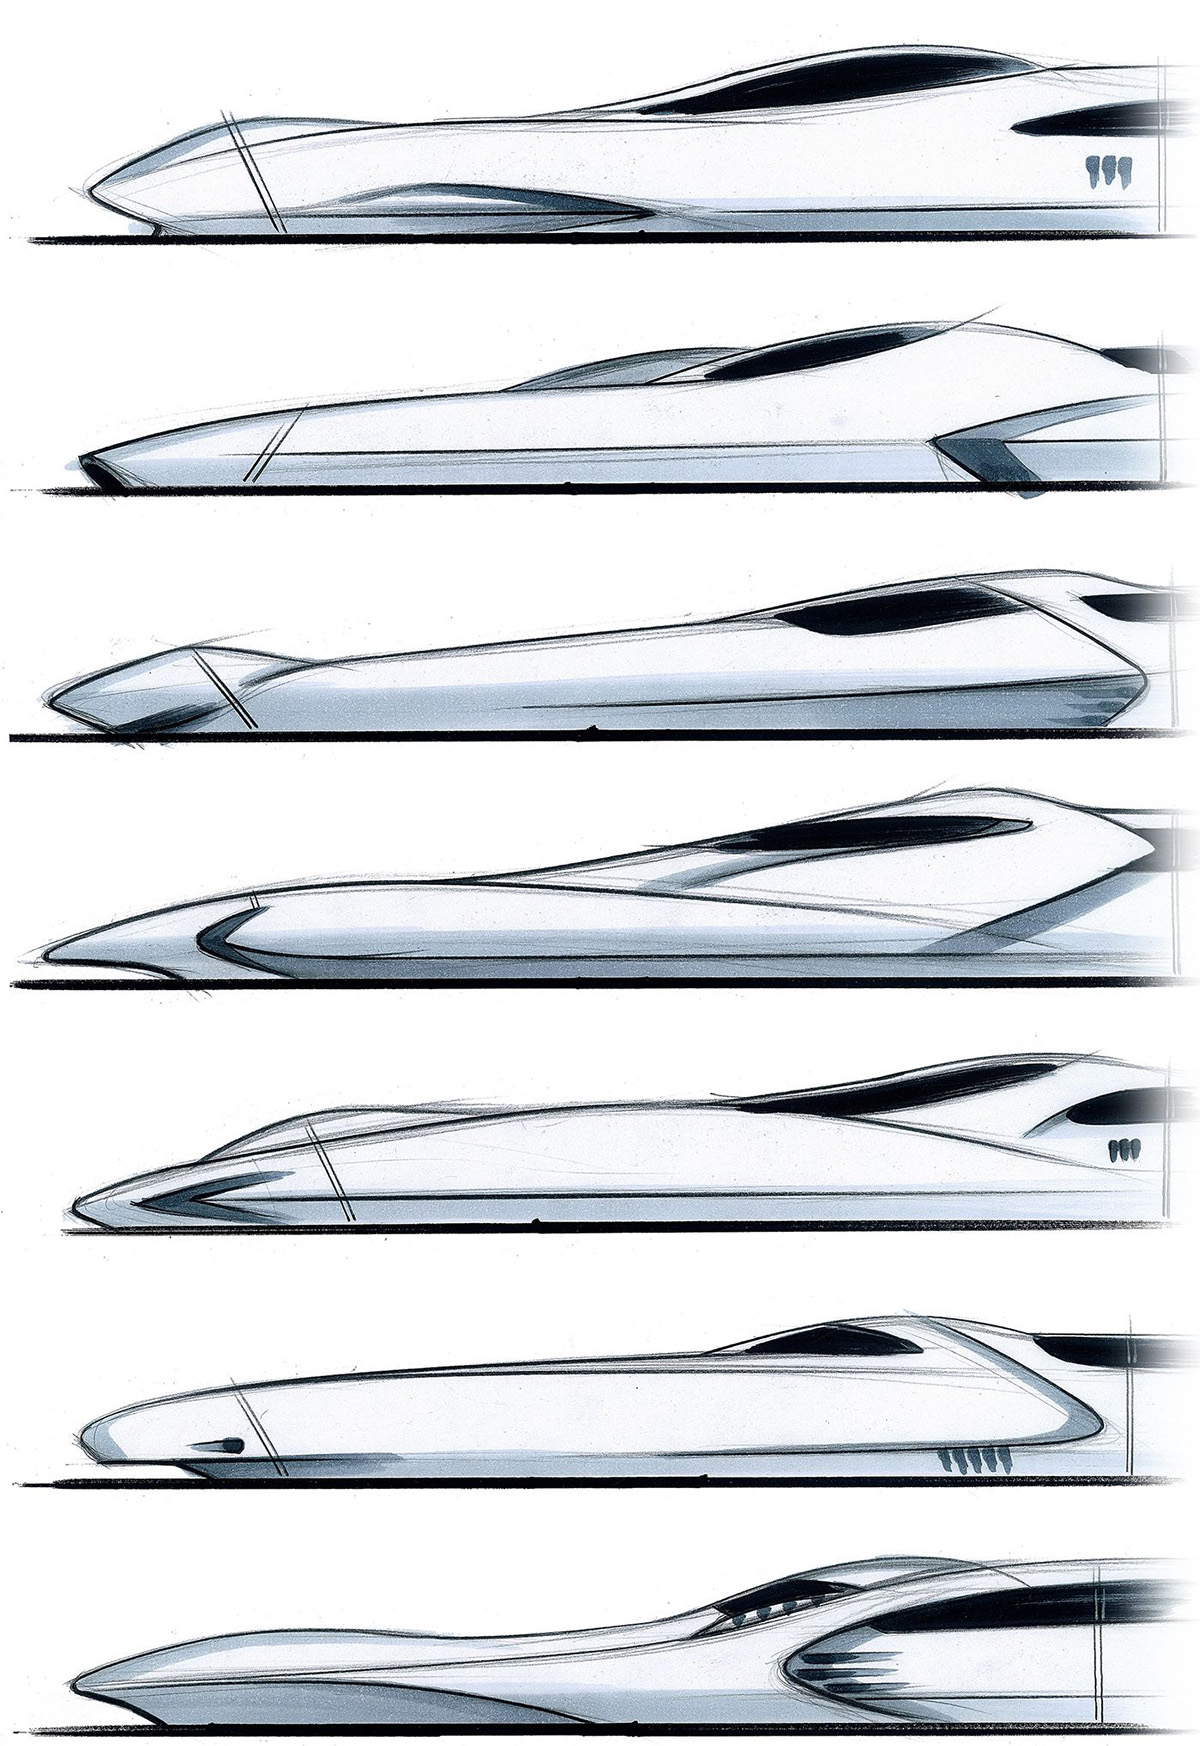 train bullet train sketching Transportation Design transportation Vehicle